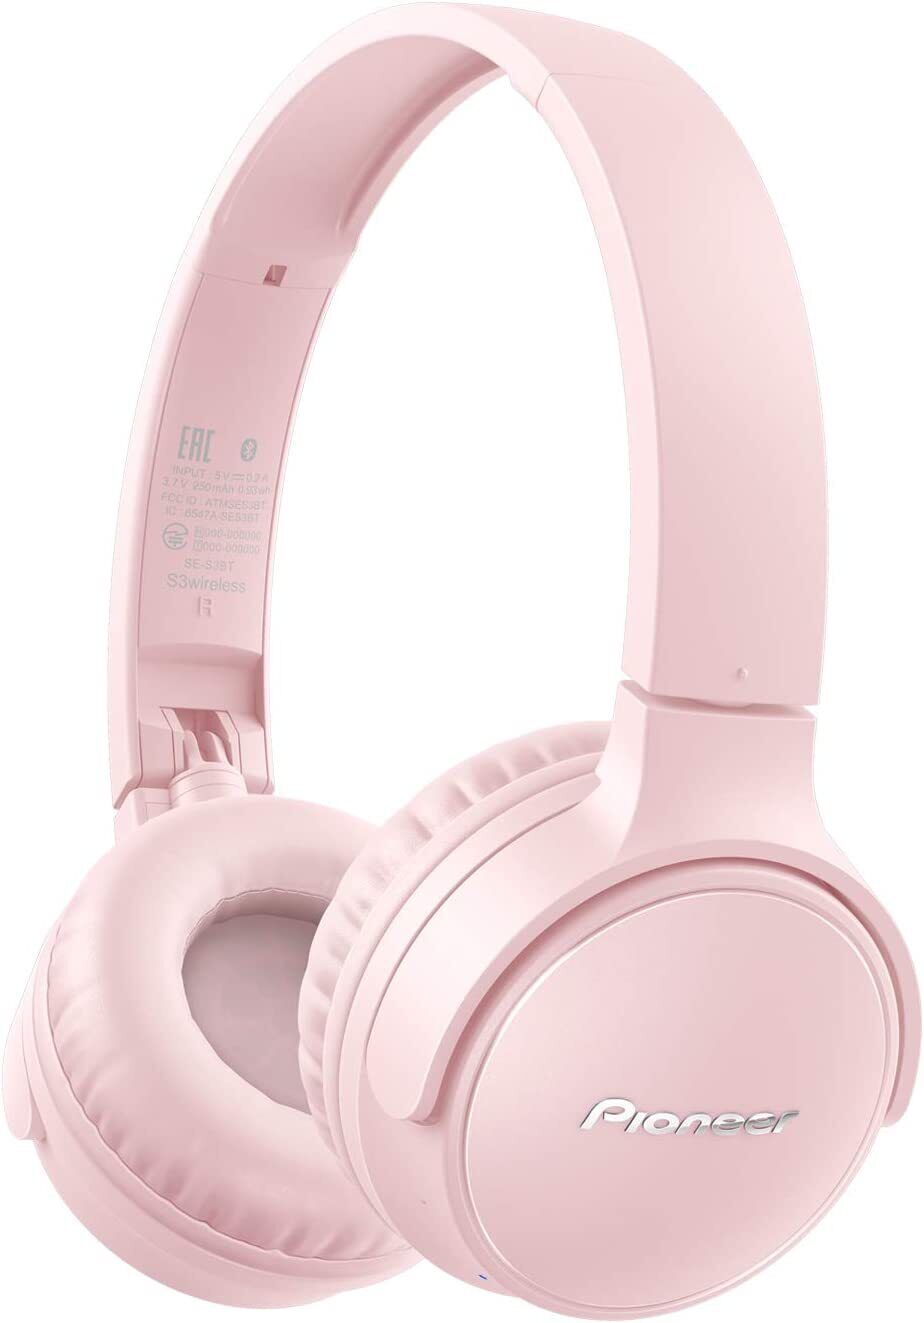 SE-S3BT(P) 2019 Pioneer S3wireless headphones : Bluetooth sealed pink New